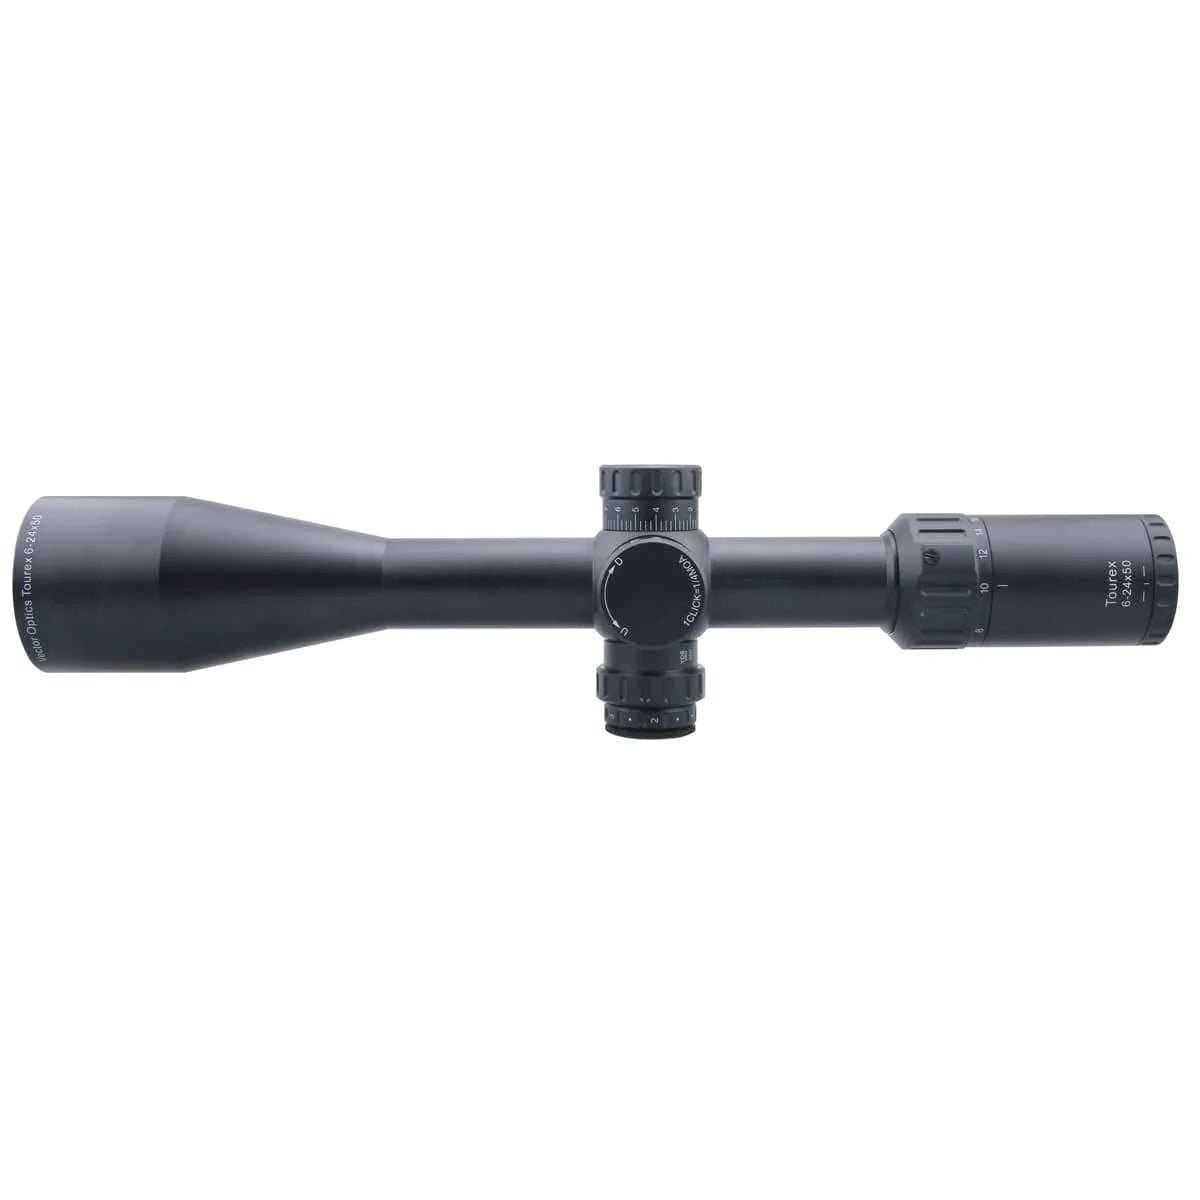 Vector Optics Tourex. 6-24 X 50 FFP Riflescope.